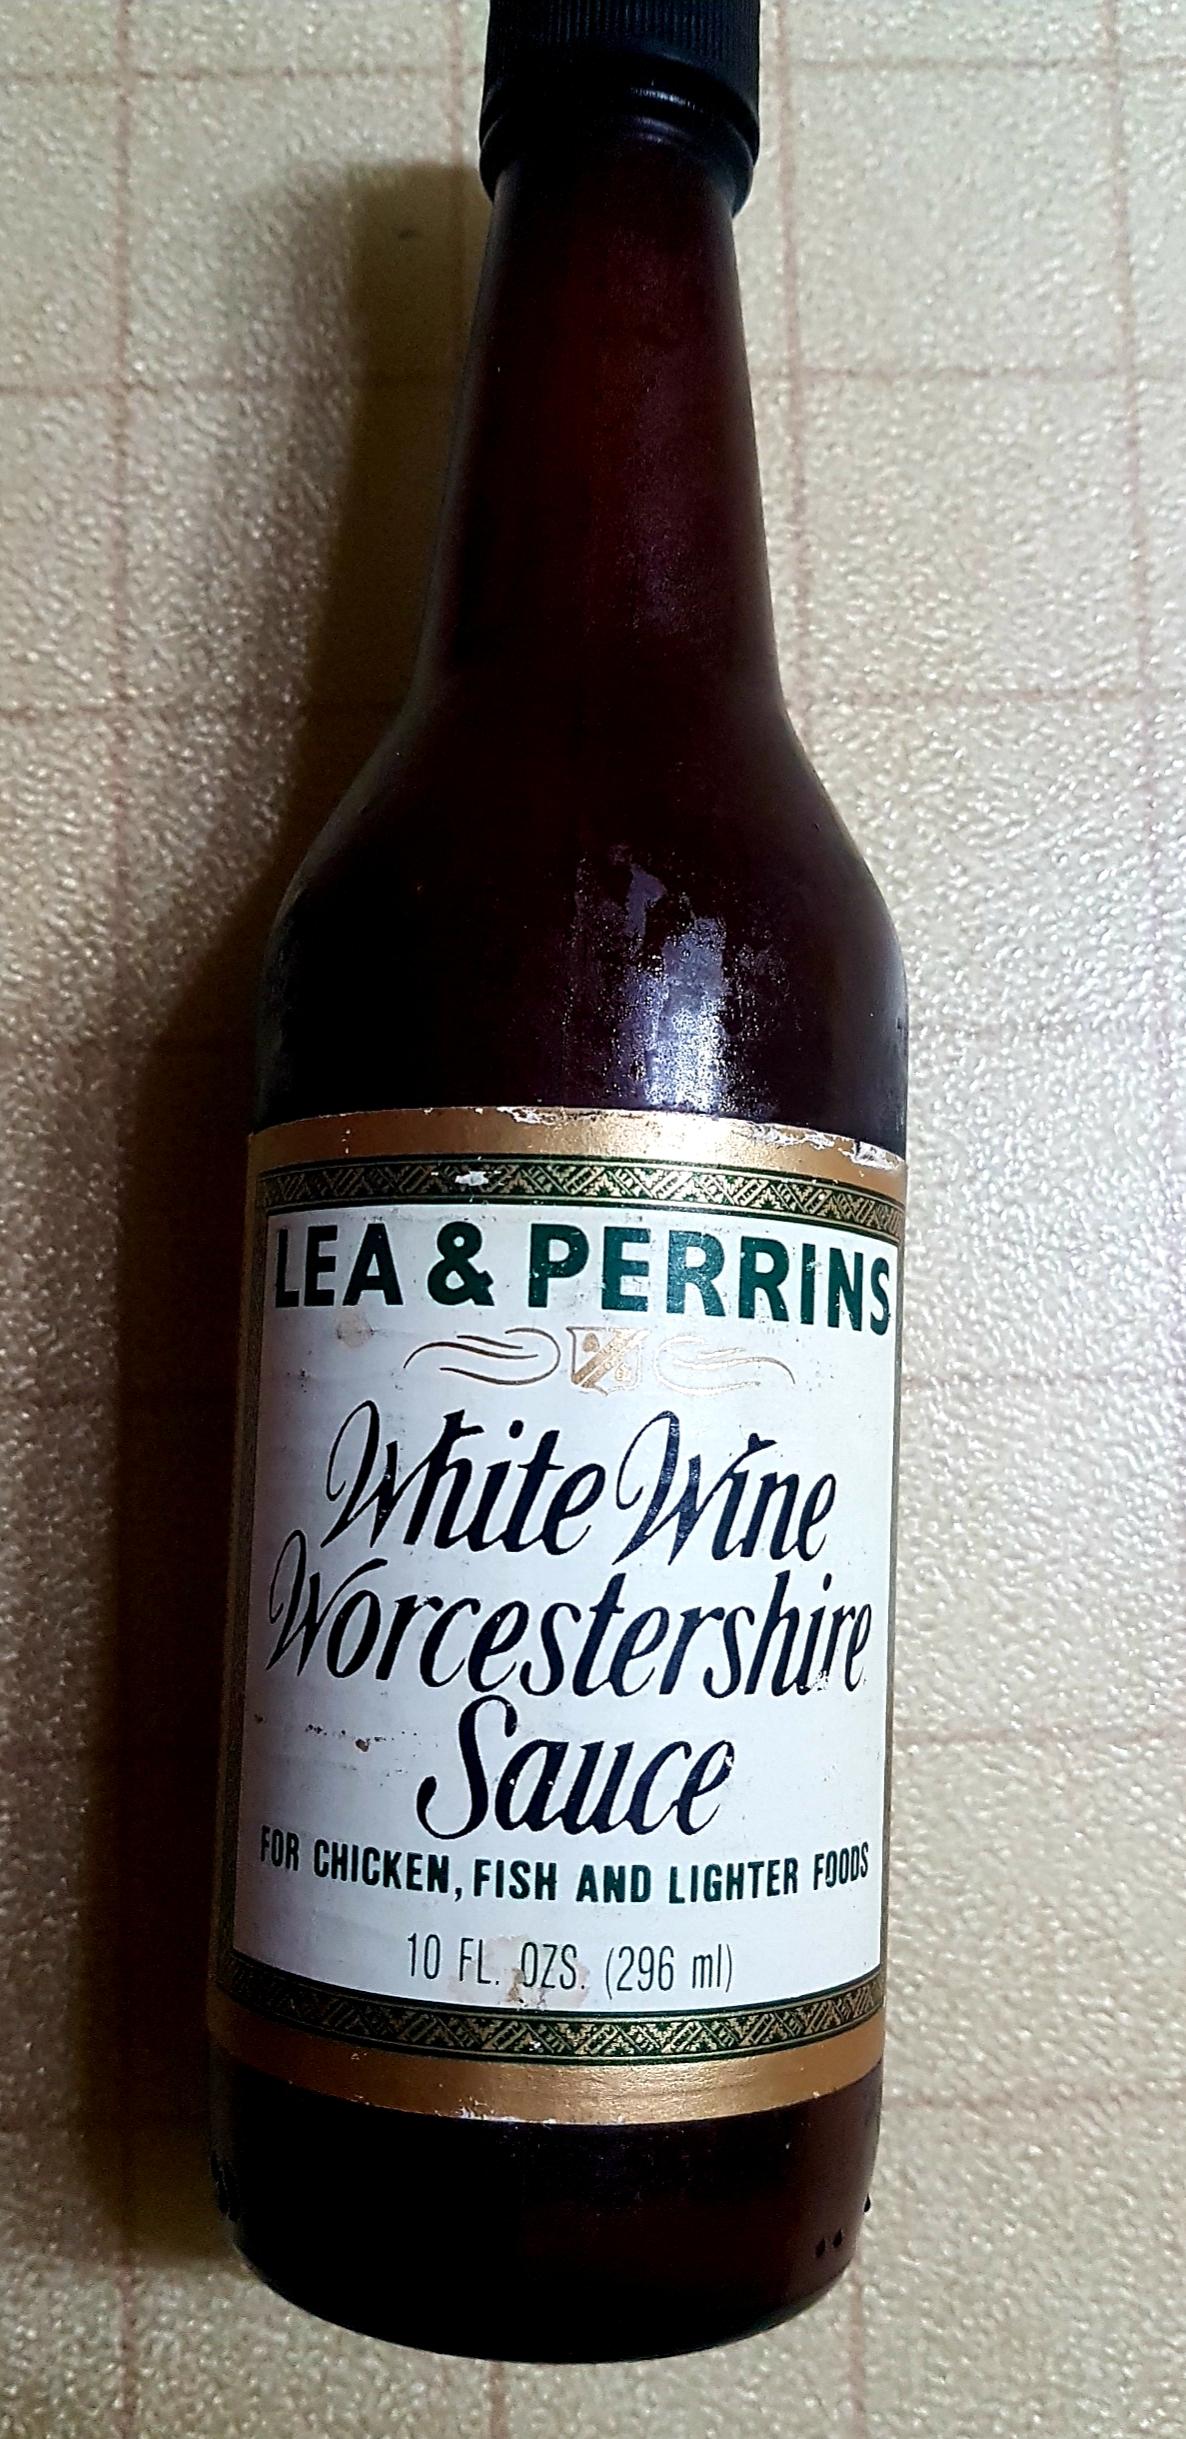 Lea & Perrins The Original Worcestershire Sauce (5 fl oz Bottle)